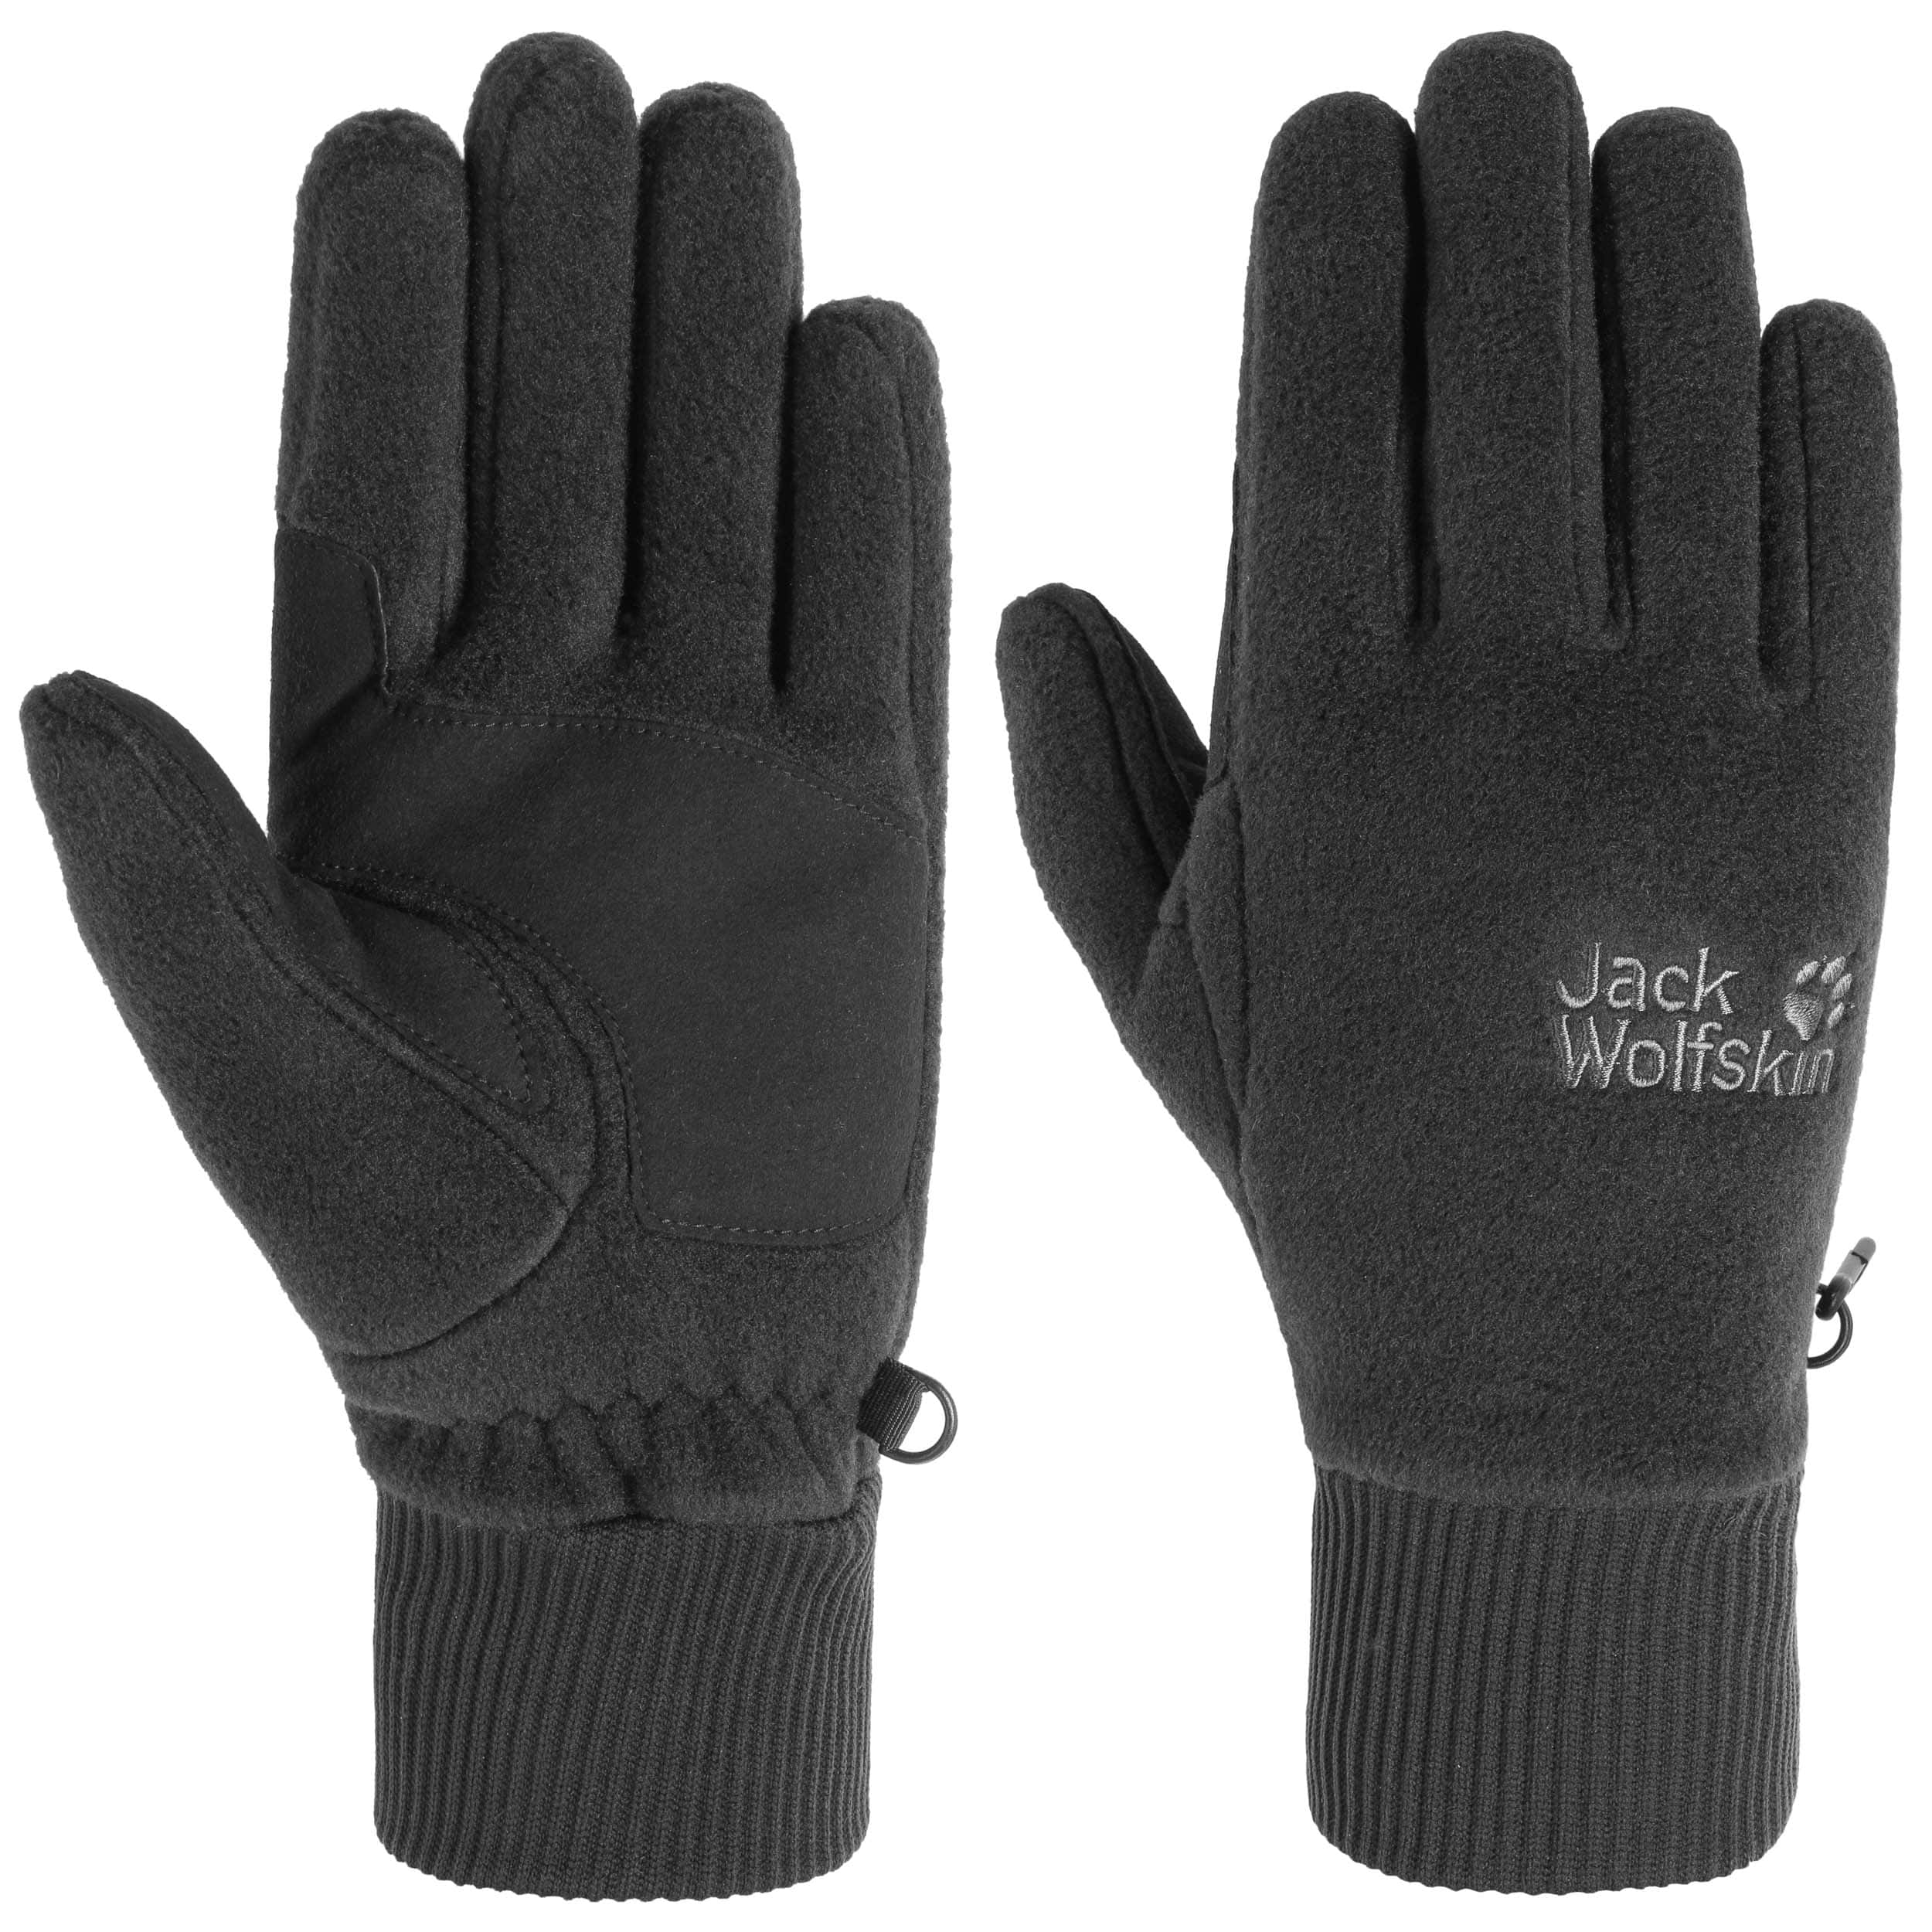 Vertigo Fleece Gloves by € - 37,95 Wolfskin Jack